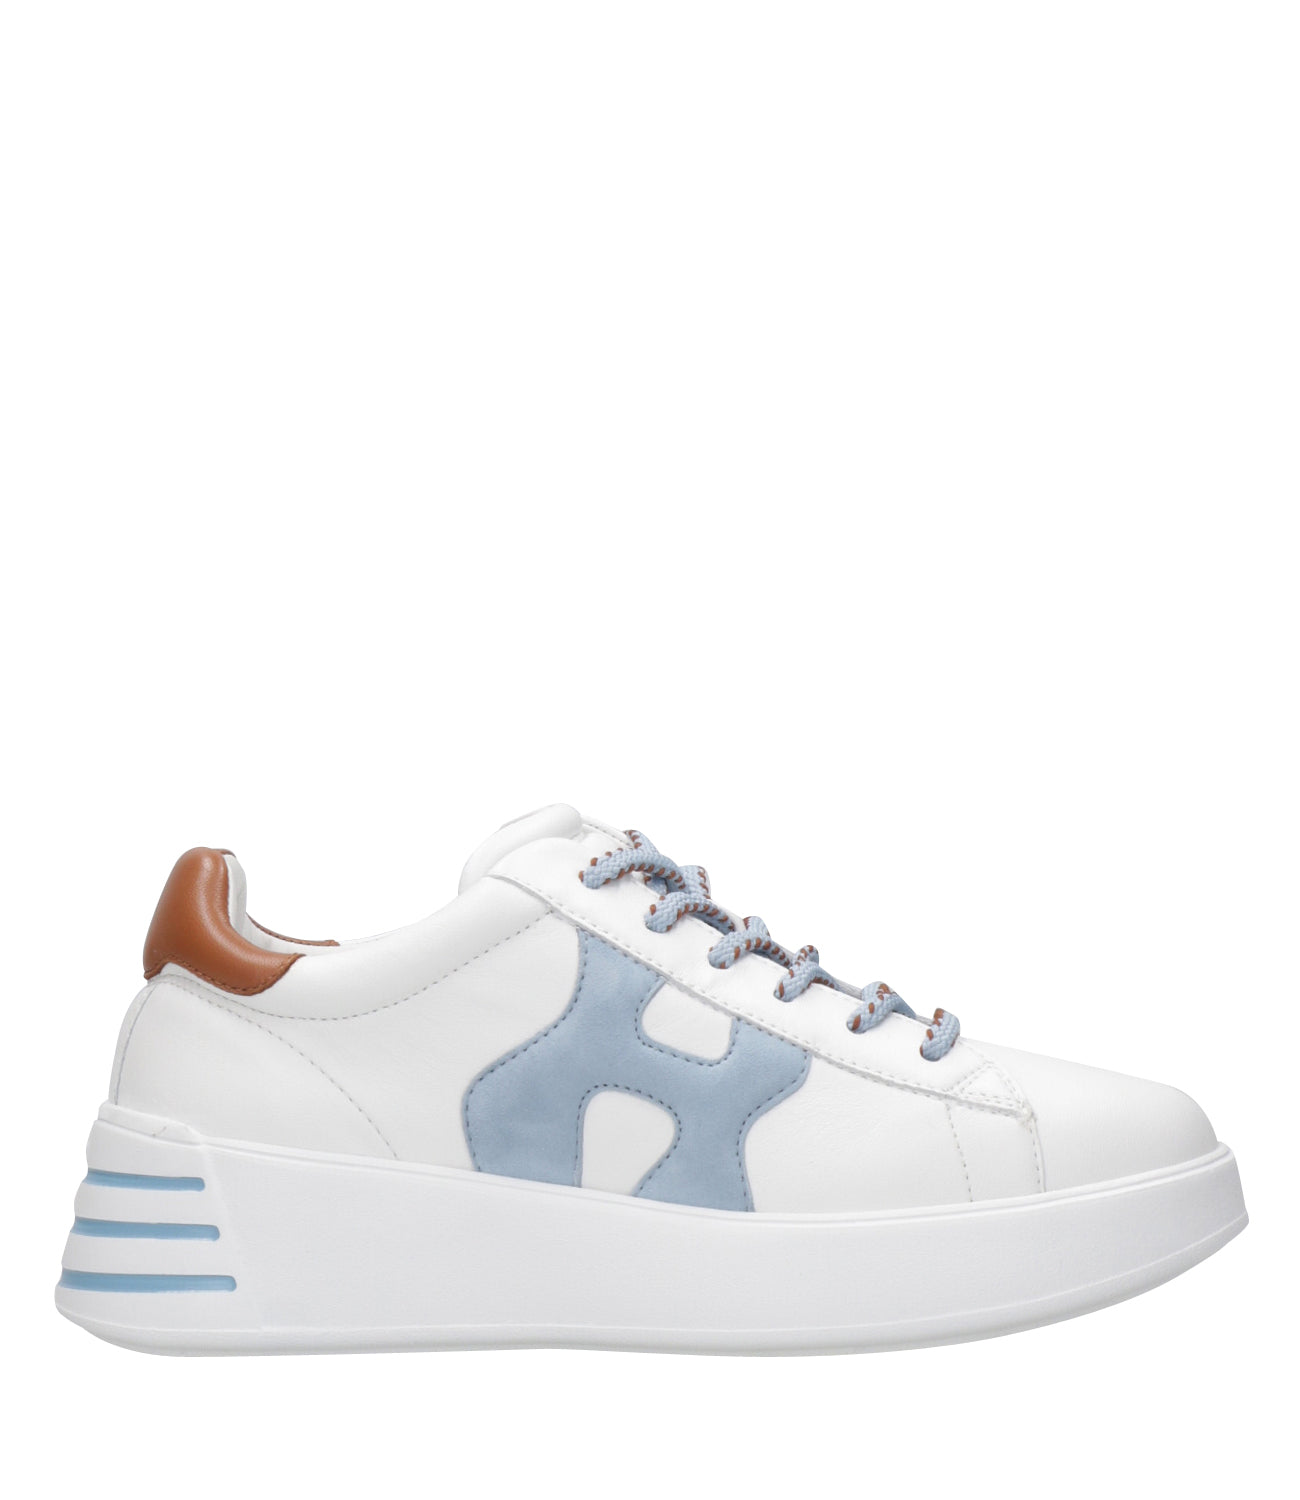 Hogan | Sneakers Rebel Bianco e Arancio